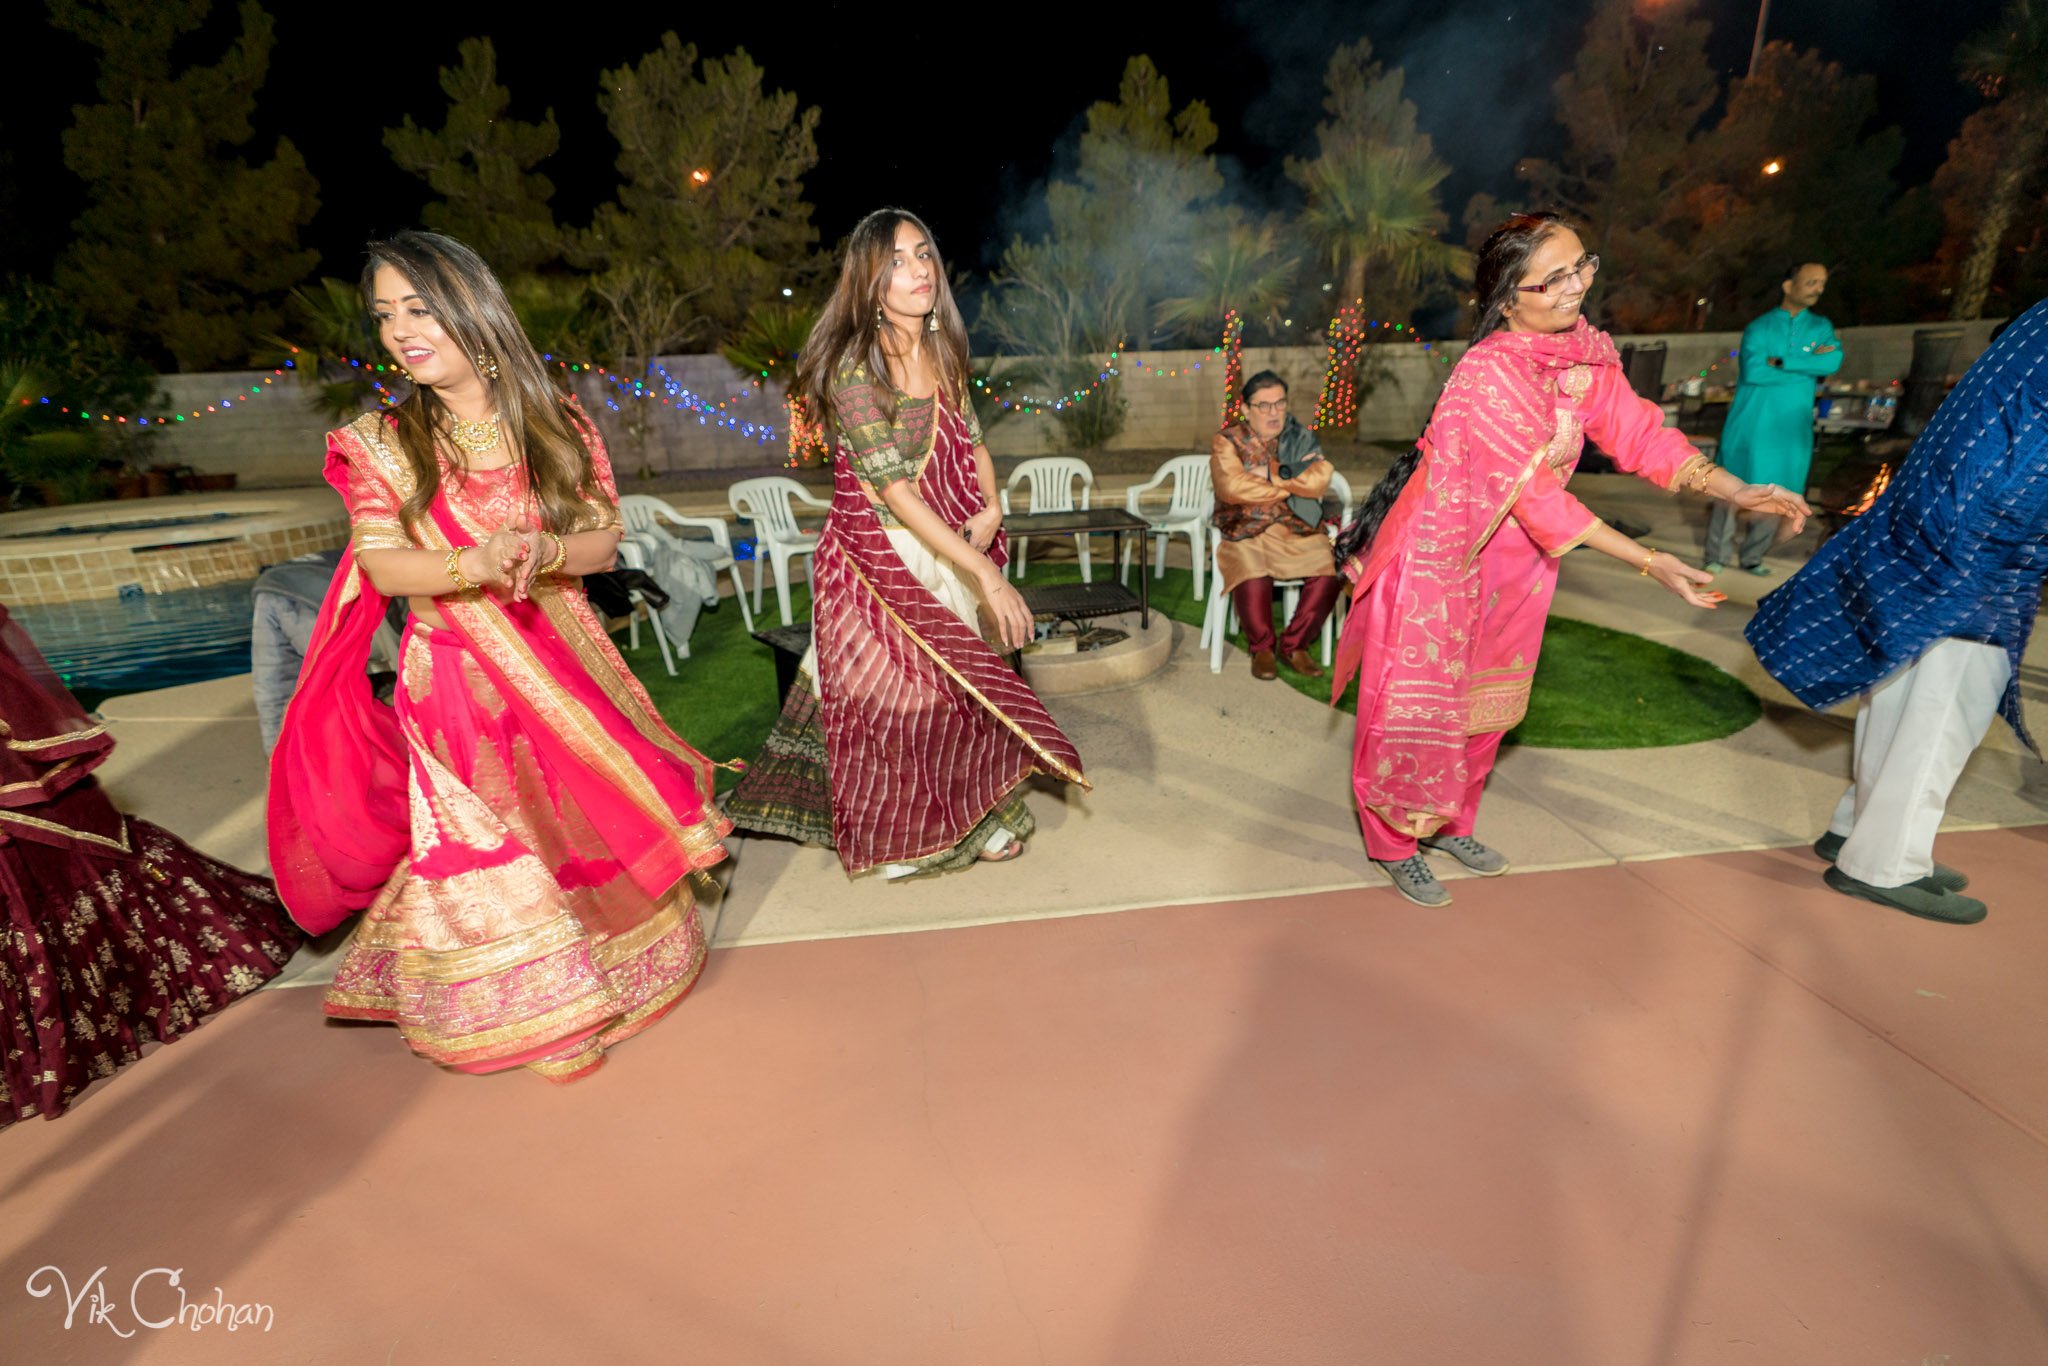 2022-02-04-Hely-&-Parth-Garba-Night-Indian-Wedding-Vik-Chohan-Photography-Photo-Booth-Social-Media-VCP-095.jpg